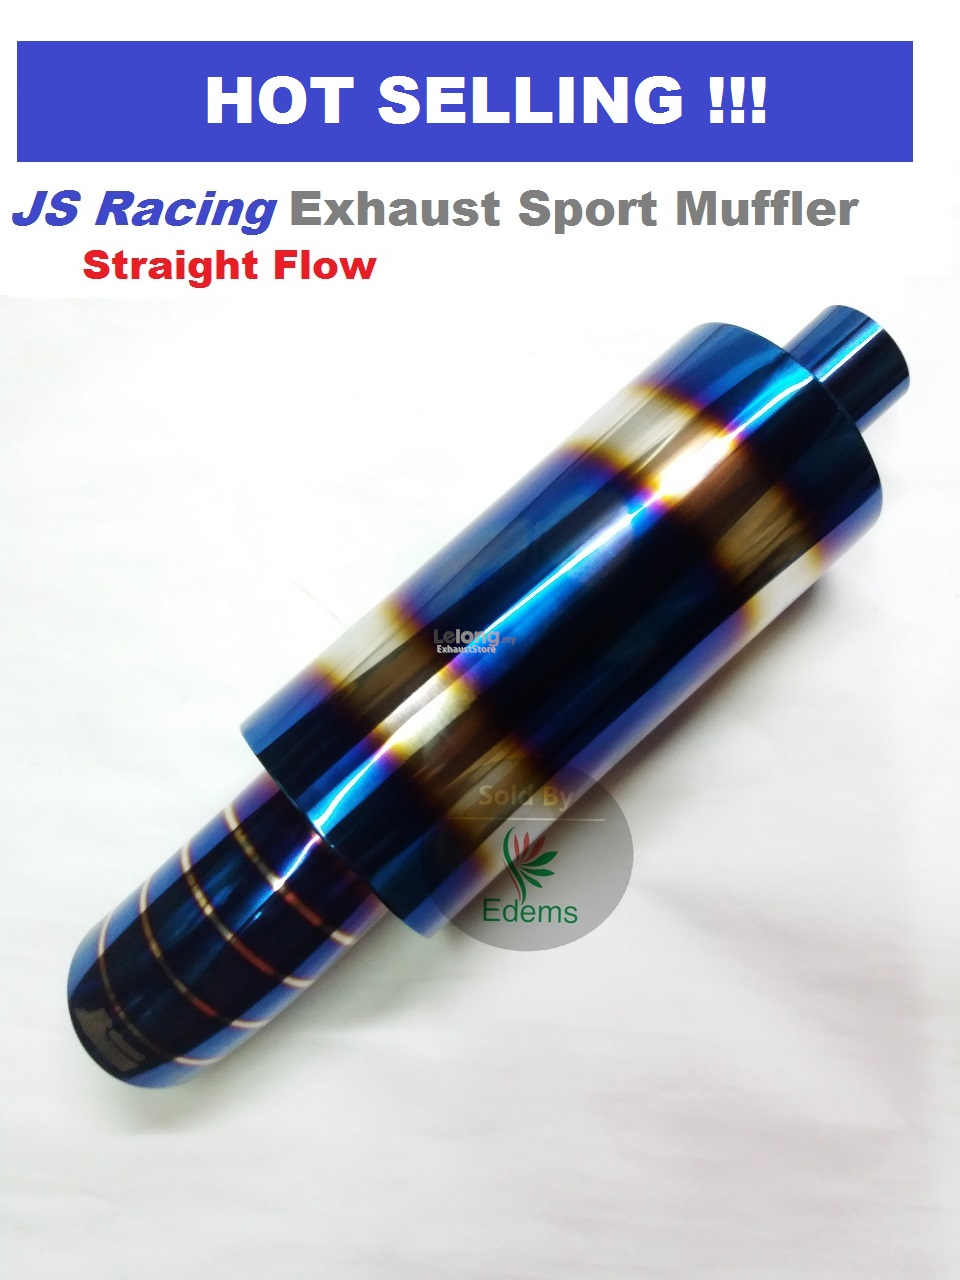 HKS JASMA JS Racing Muffler Exhaust Stainless Steel Exhaust Muffler